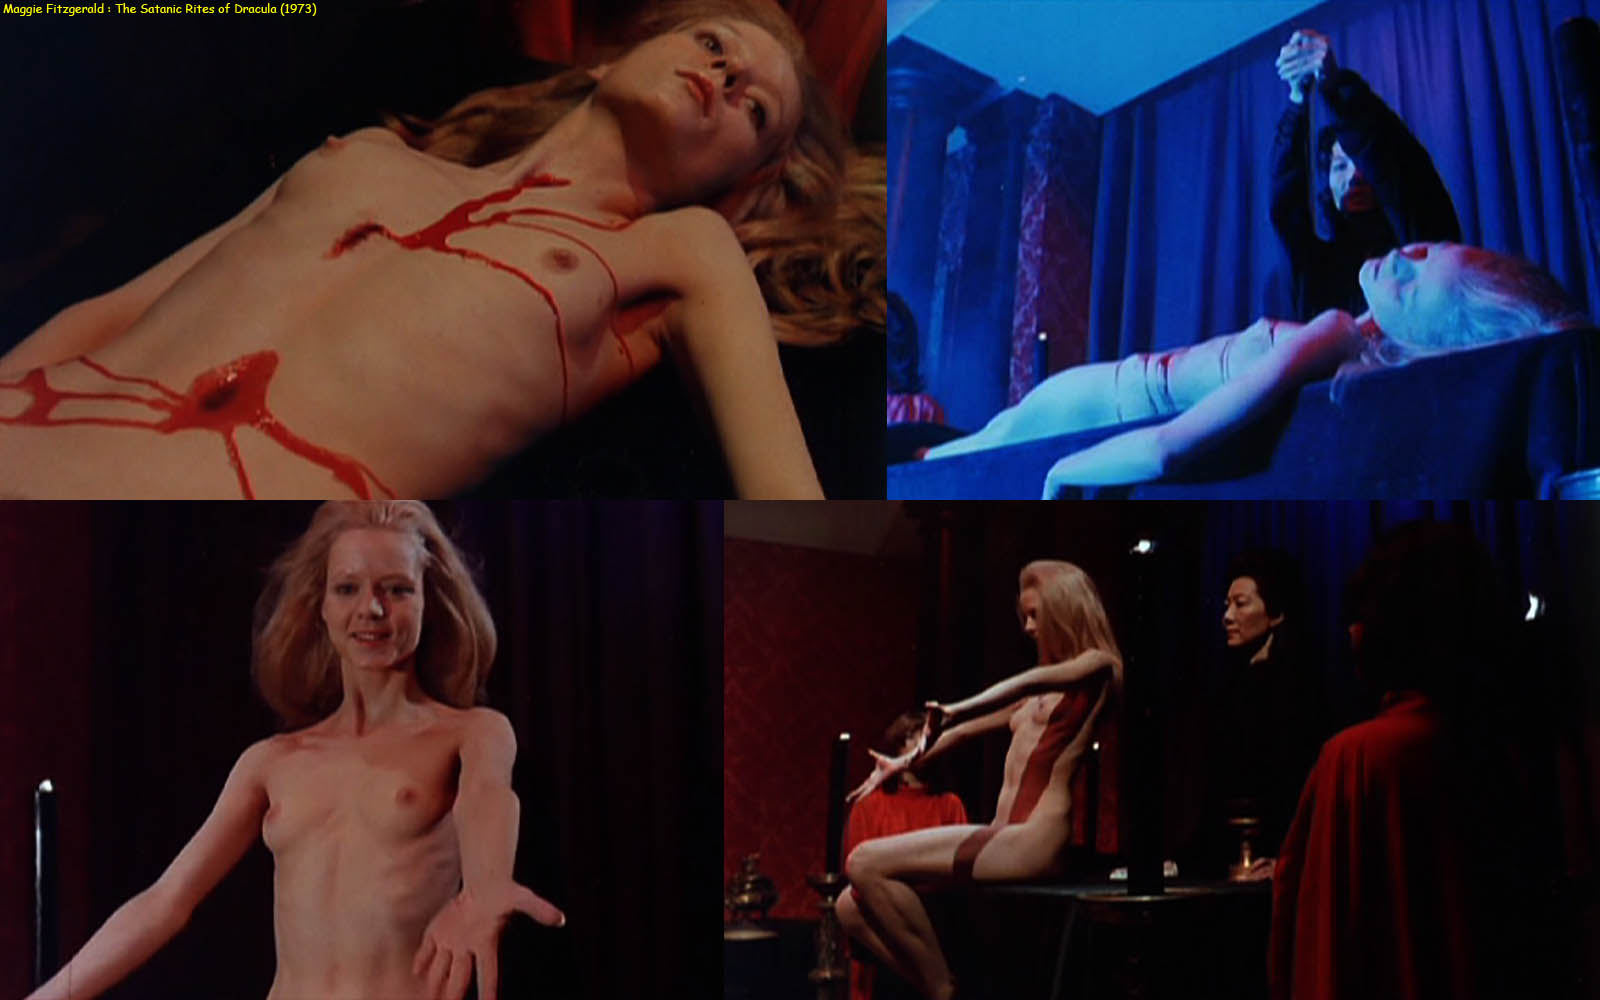 The Satanic Rites of Dracula nude photos